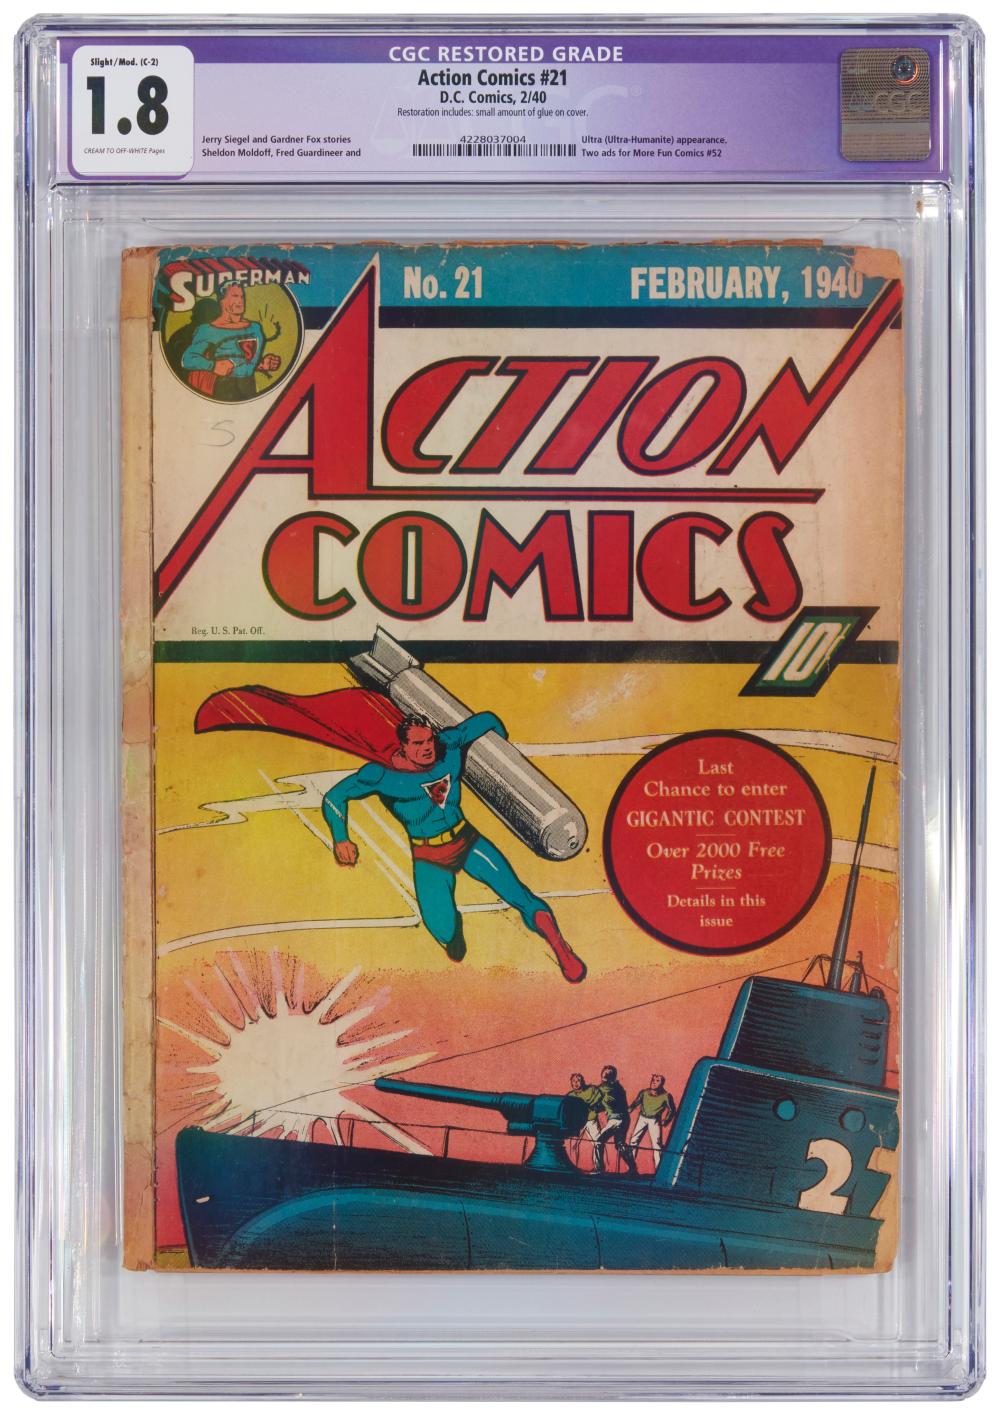 ACTION COMICS #21 (DC COMICS, 1940)Action